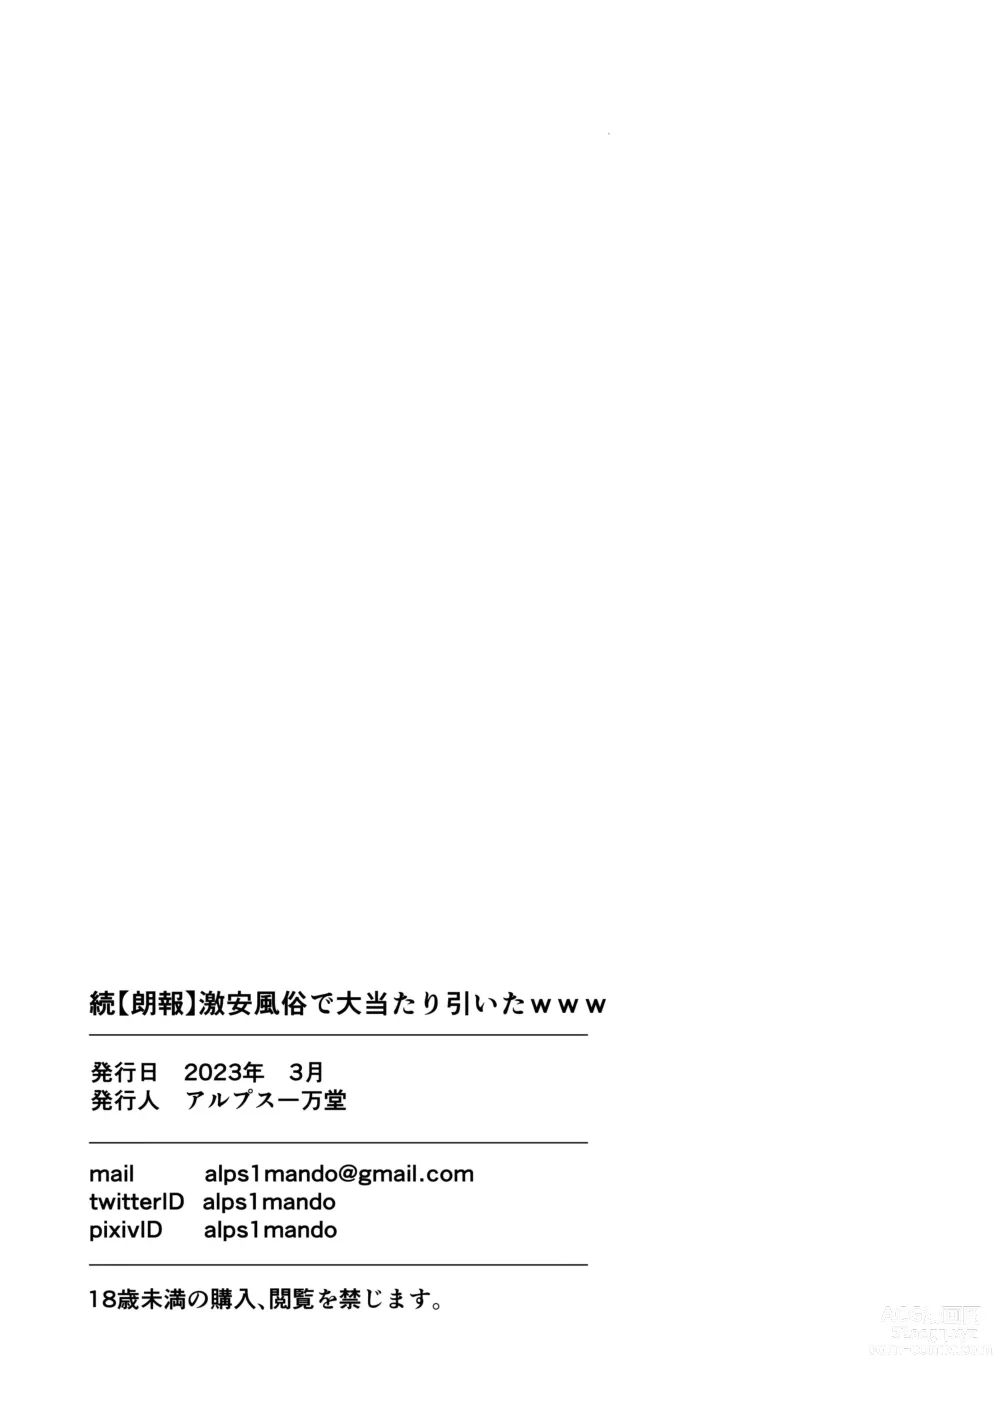 Page 57 of doujinshi Zoku【Rouhou】Gekiyasu Fuuzoku de Ooatari Hiita www 속【낭보】 싸구려 풍속에서 대박을 뽑았다ㅋㅋㅋ